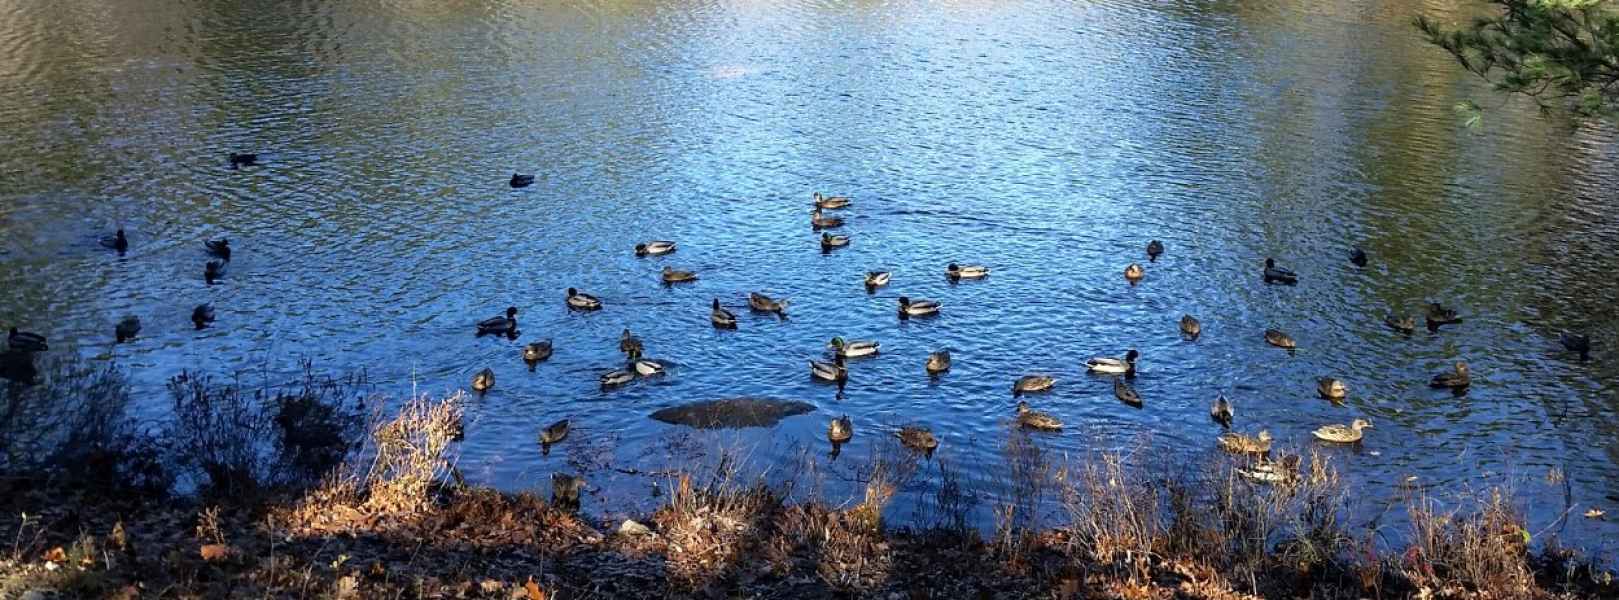 Dozens of Ducks in a Pond in Barrington, New Hampshire